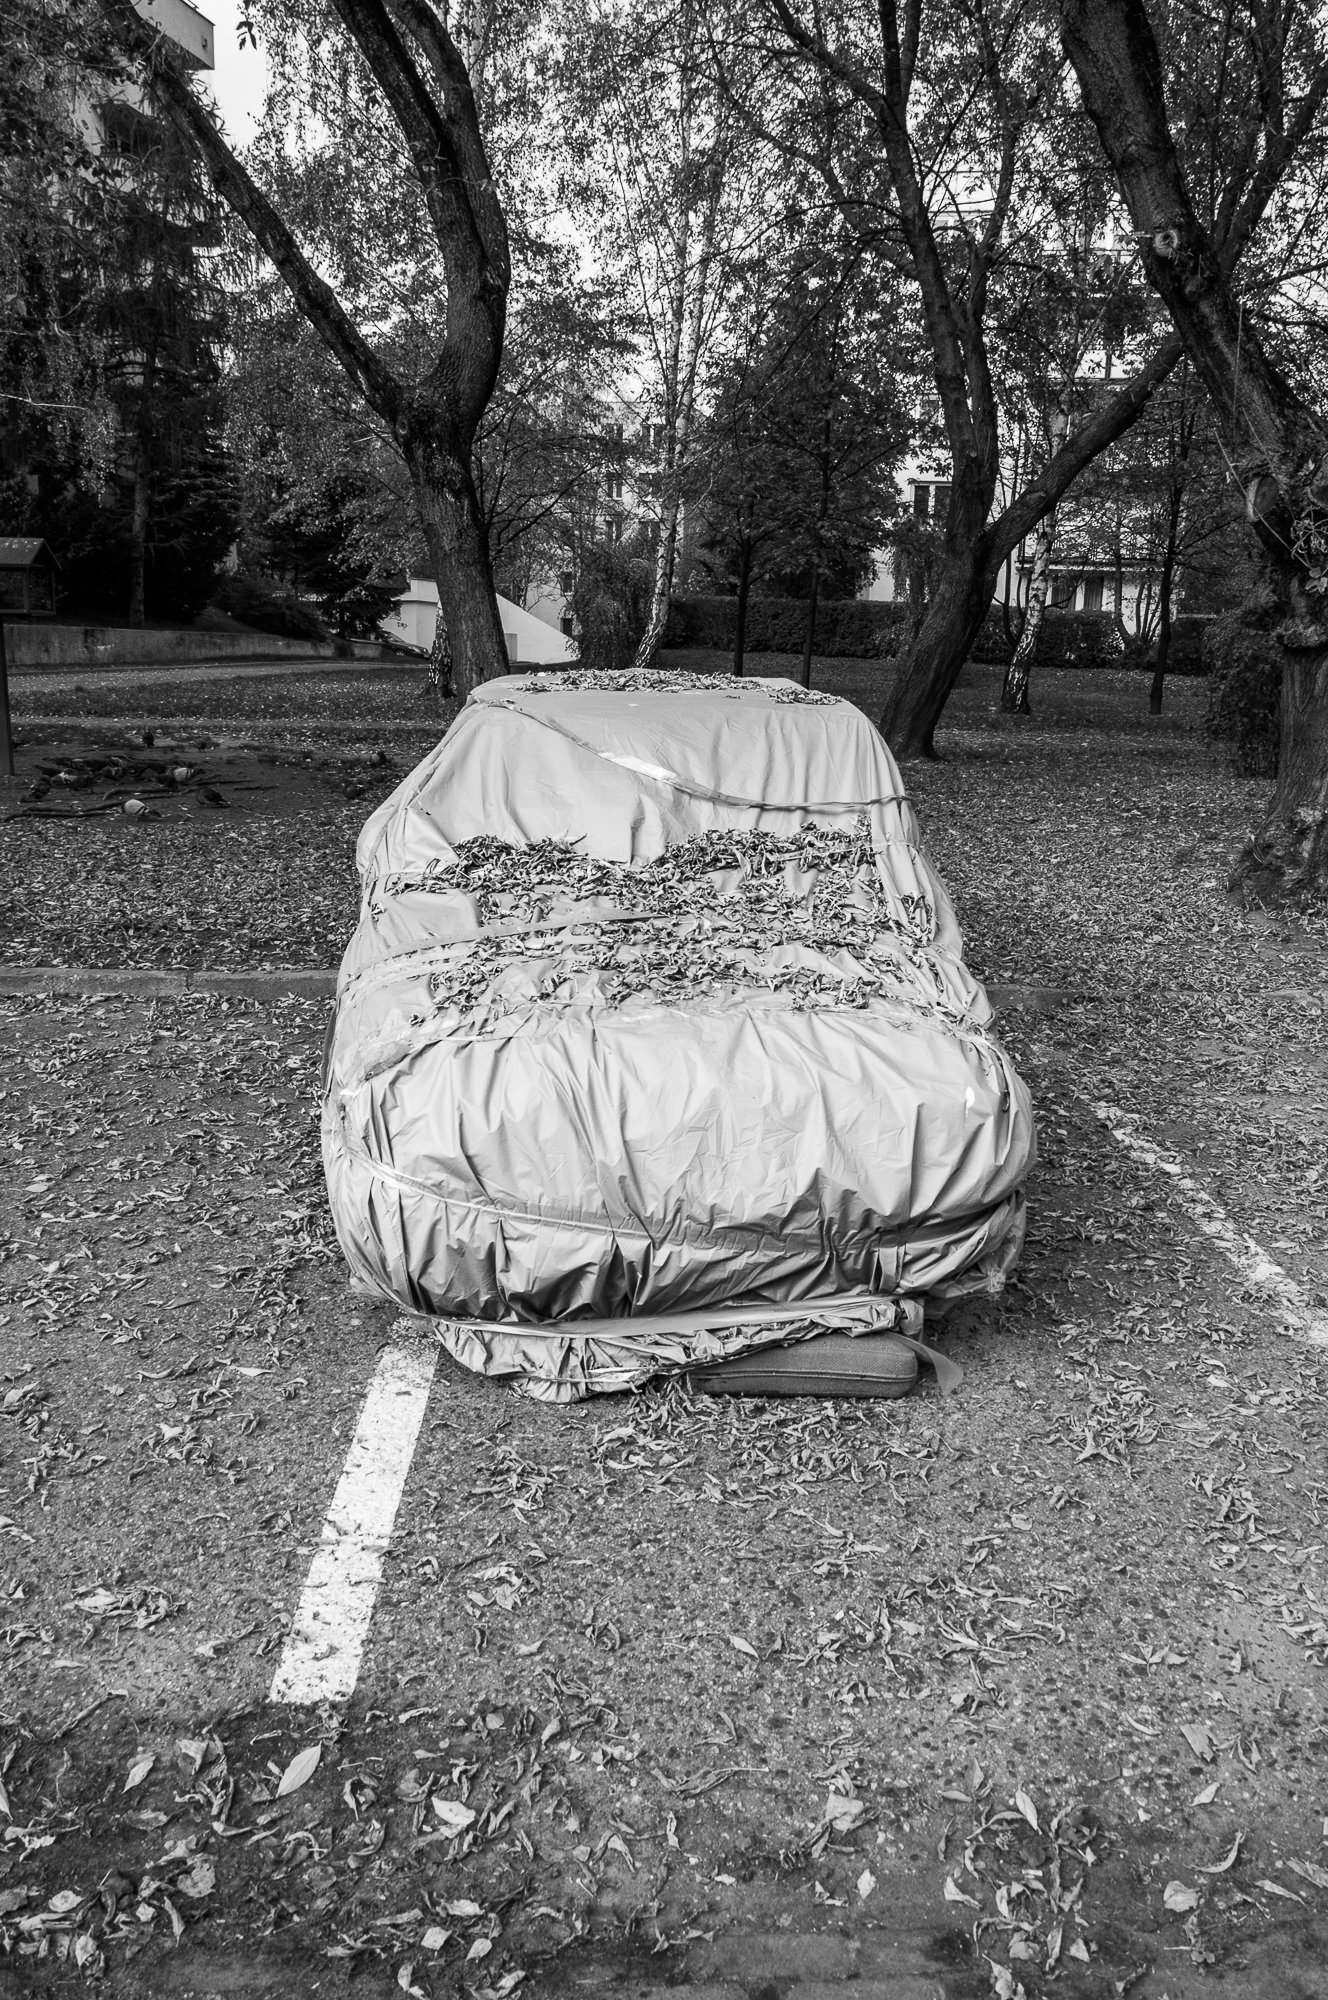 Adam Mazek Photography Warsaw (Warszawa) 2017. Post: "Uniqueness is common." Minimalism. Car.